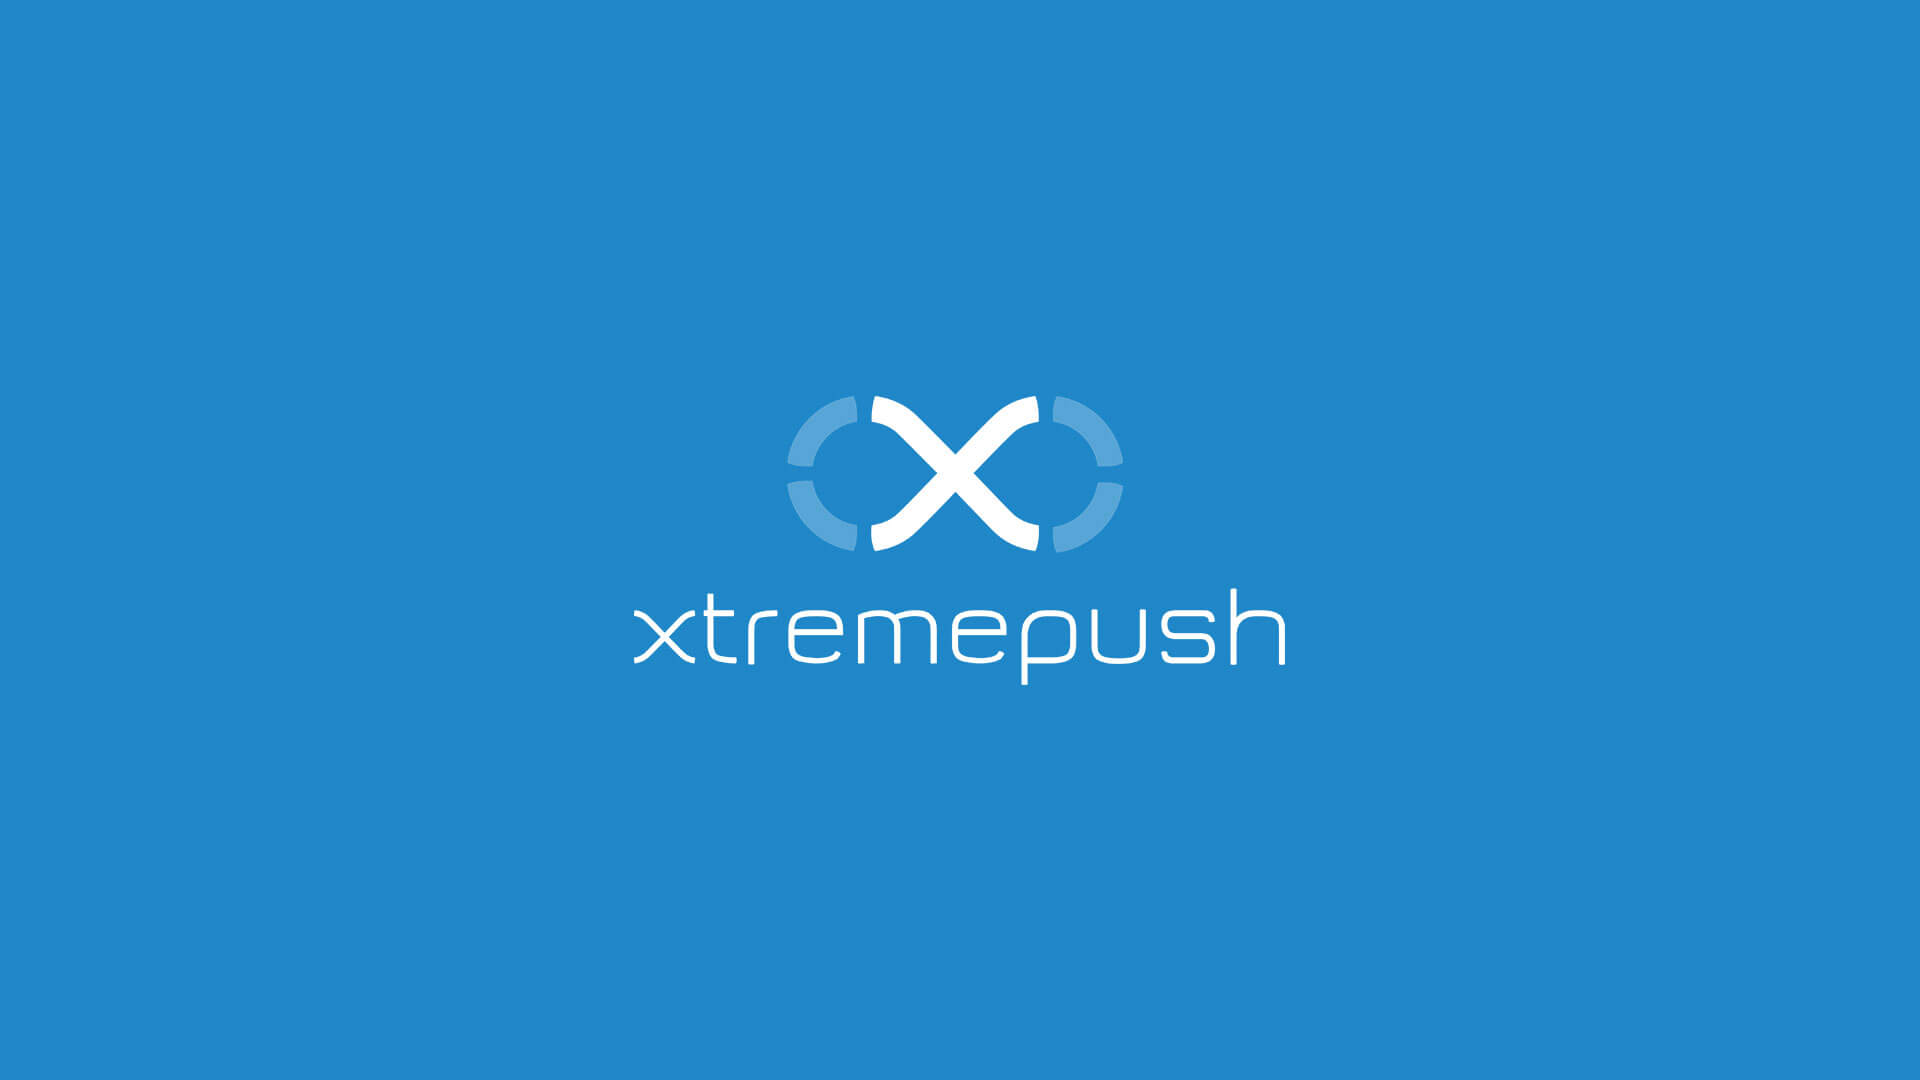 The Xtremepush logo on a blue background